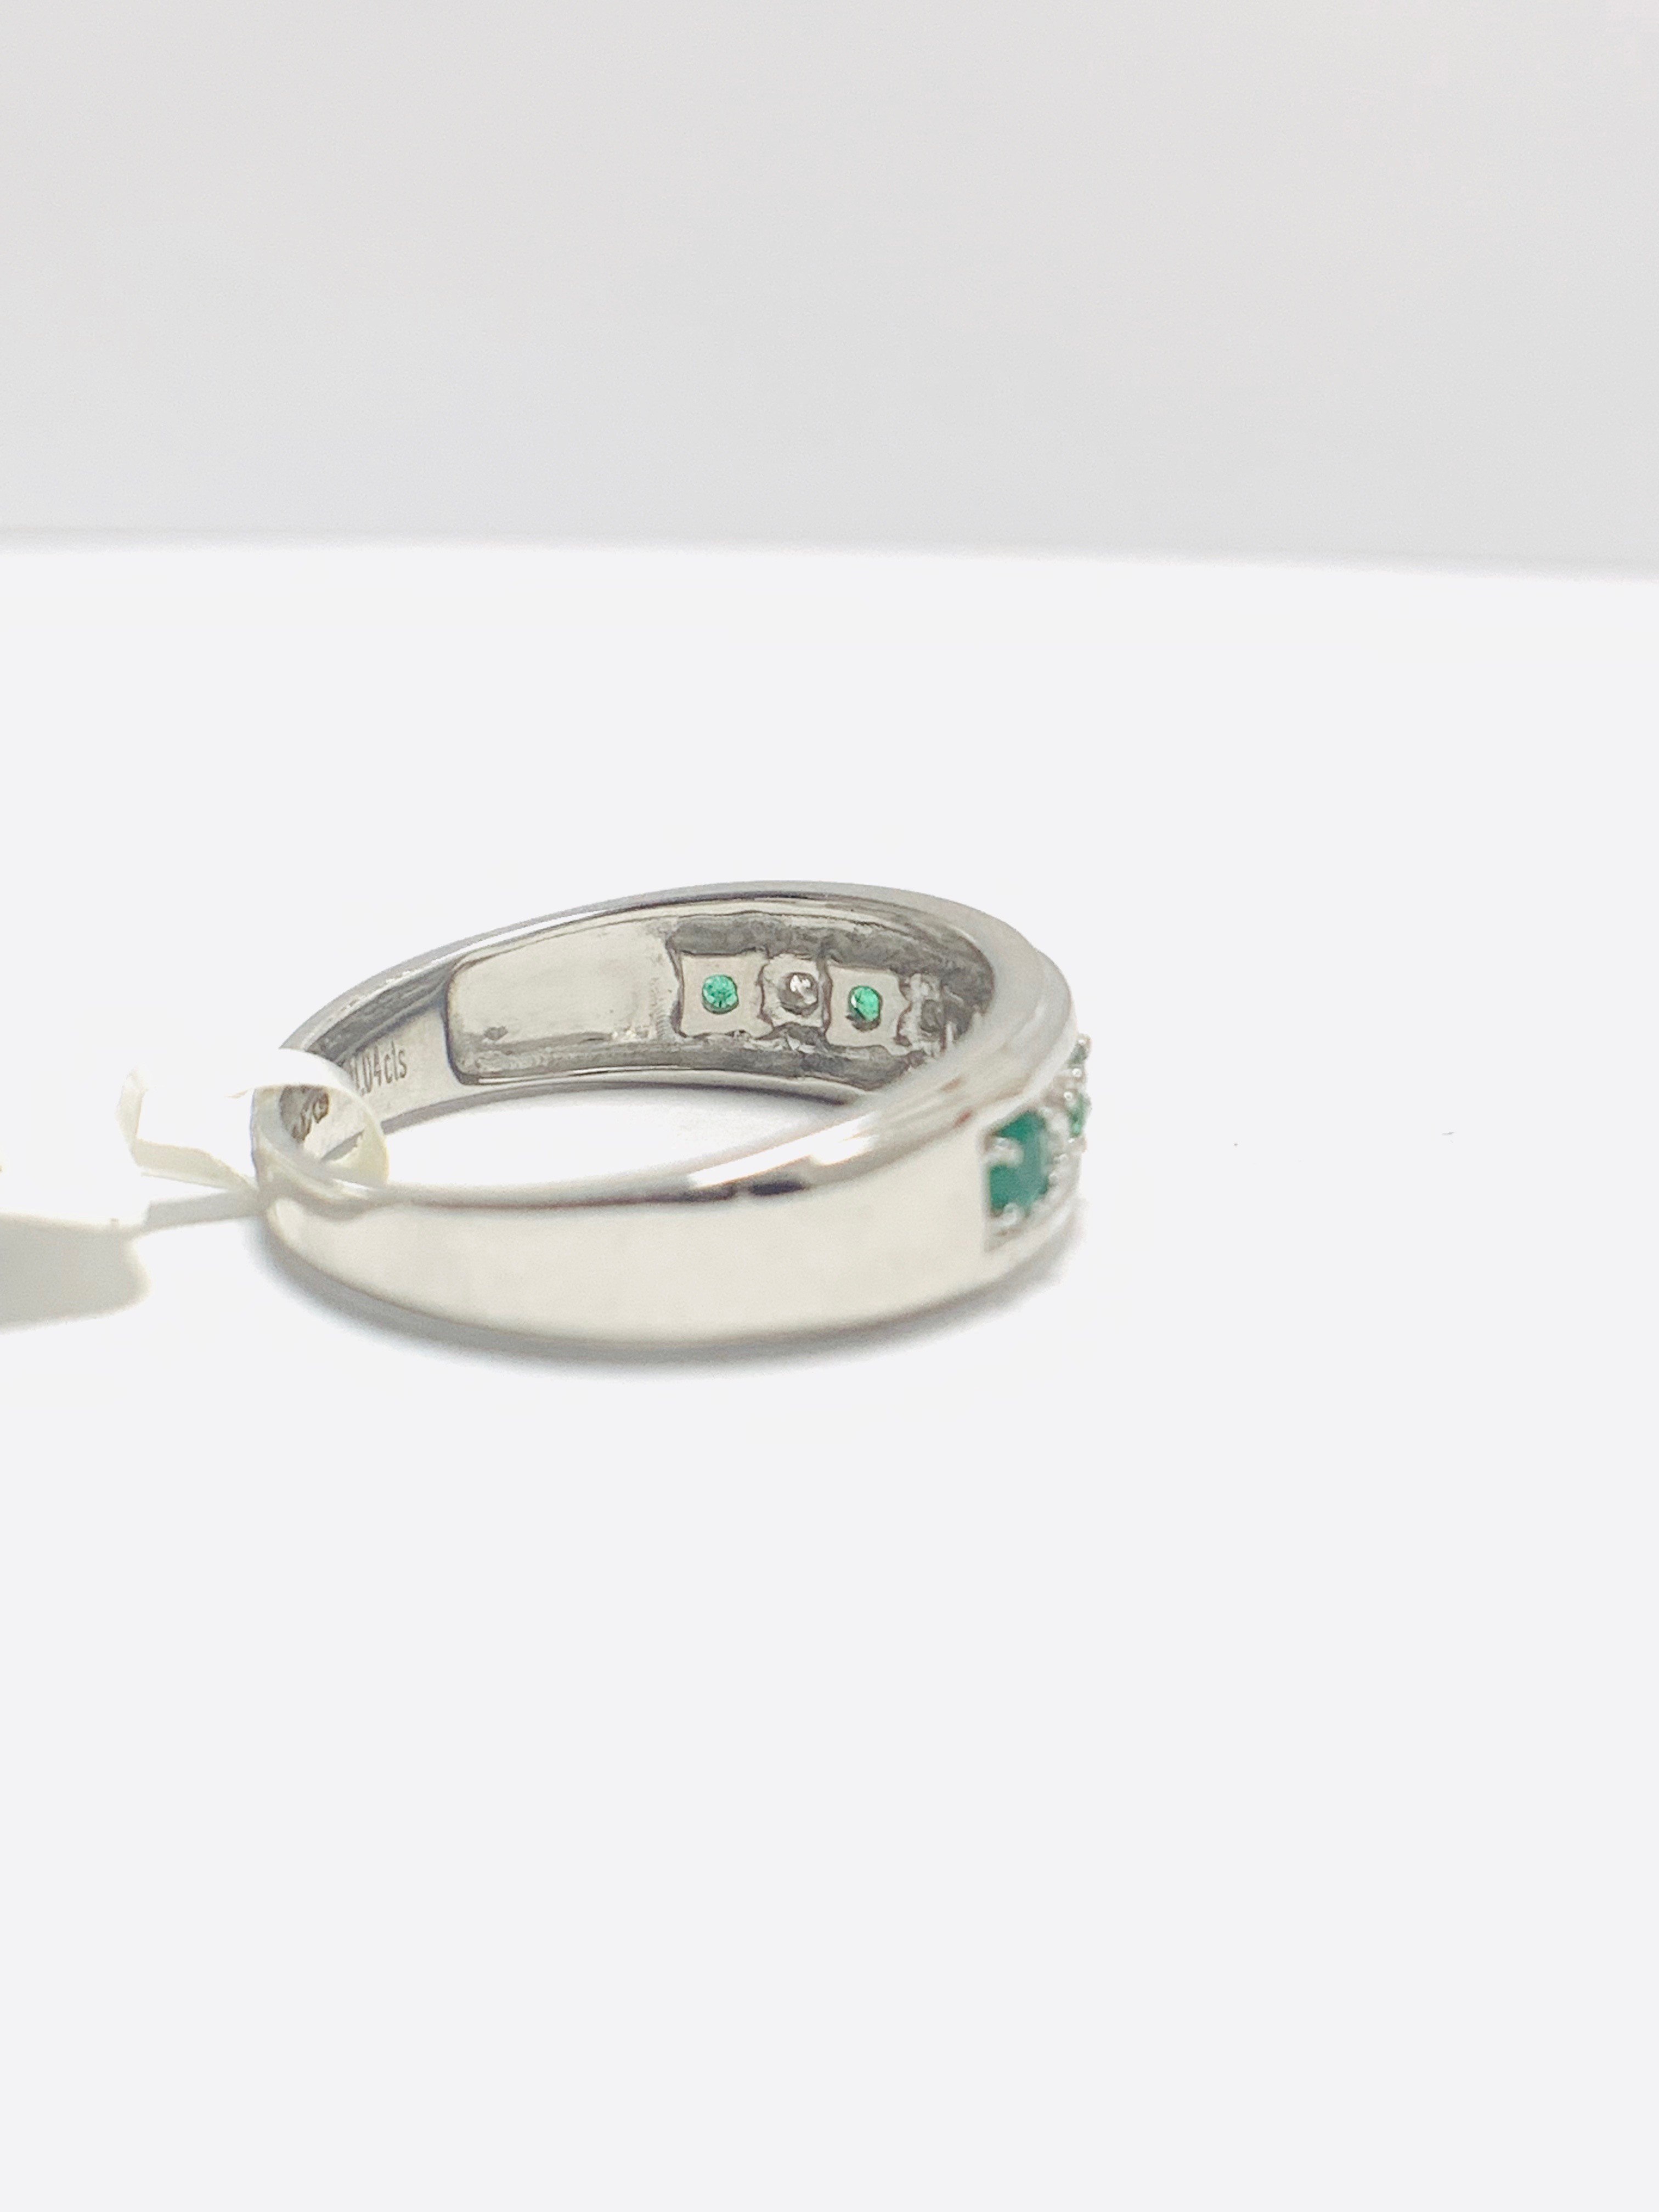 9ct white gold emerald diamond band ring. - Image 5 of 8